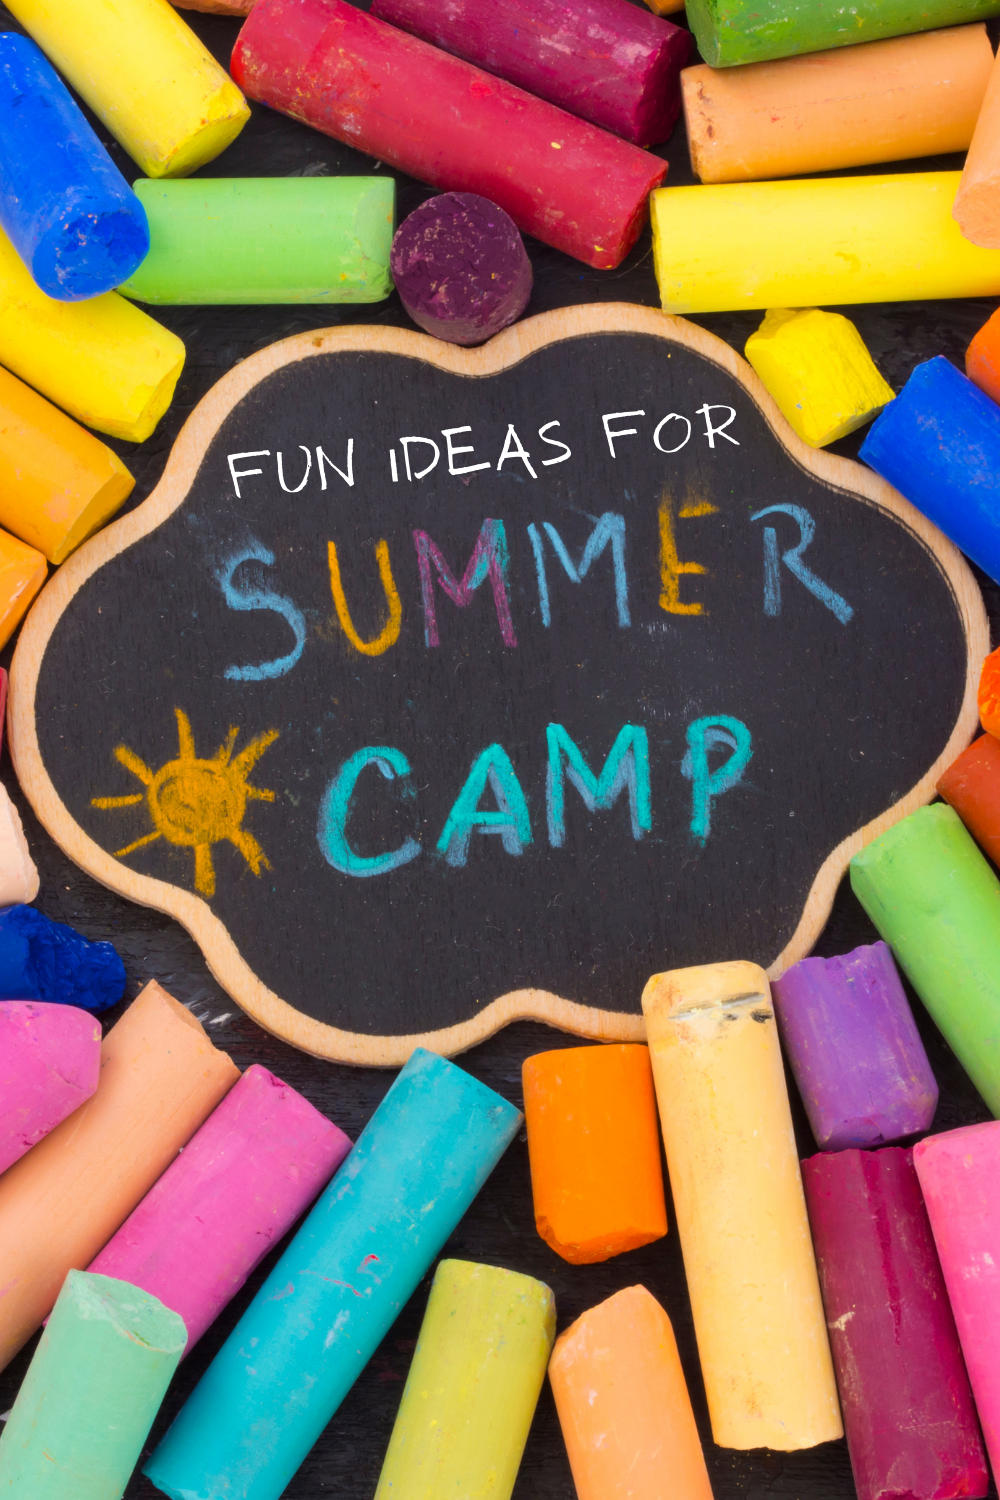 Summer camp ideas for kids